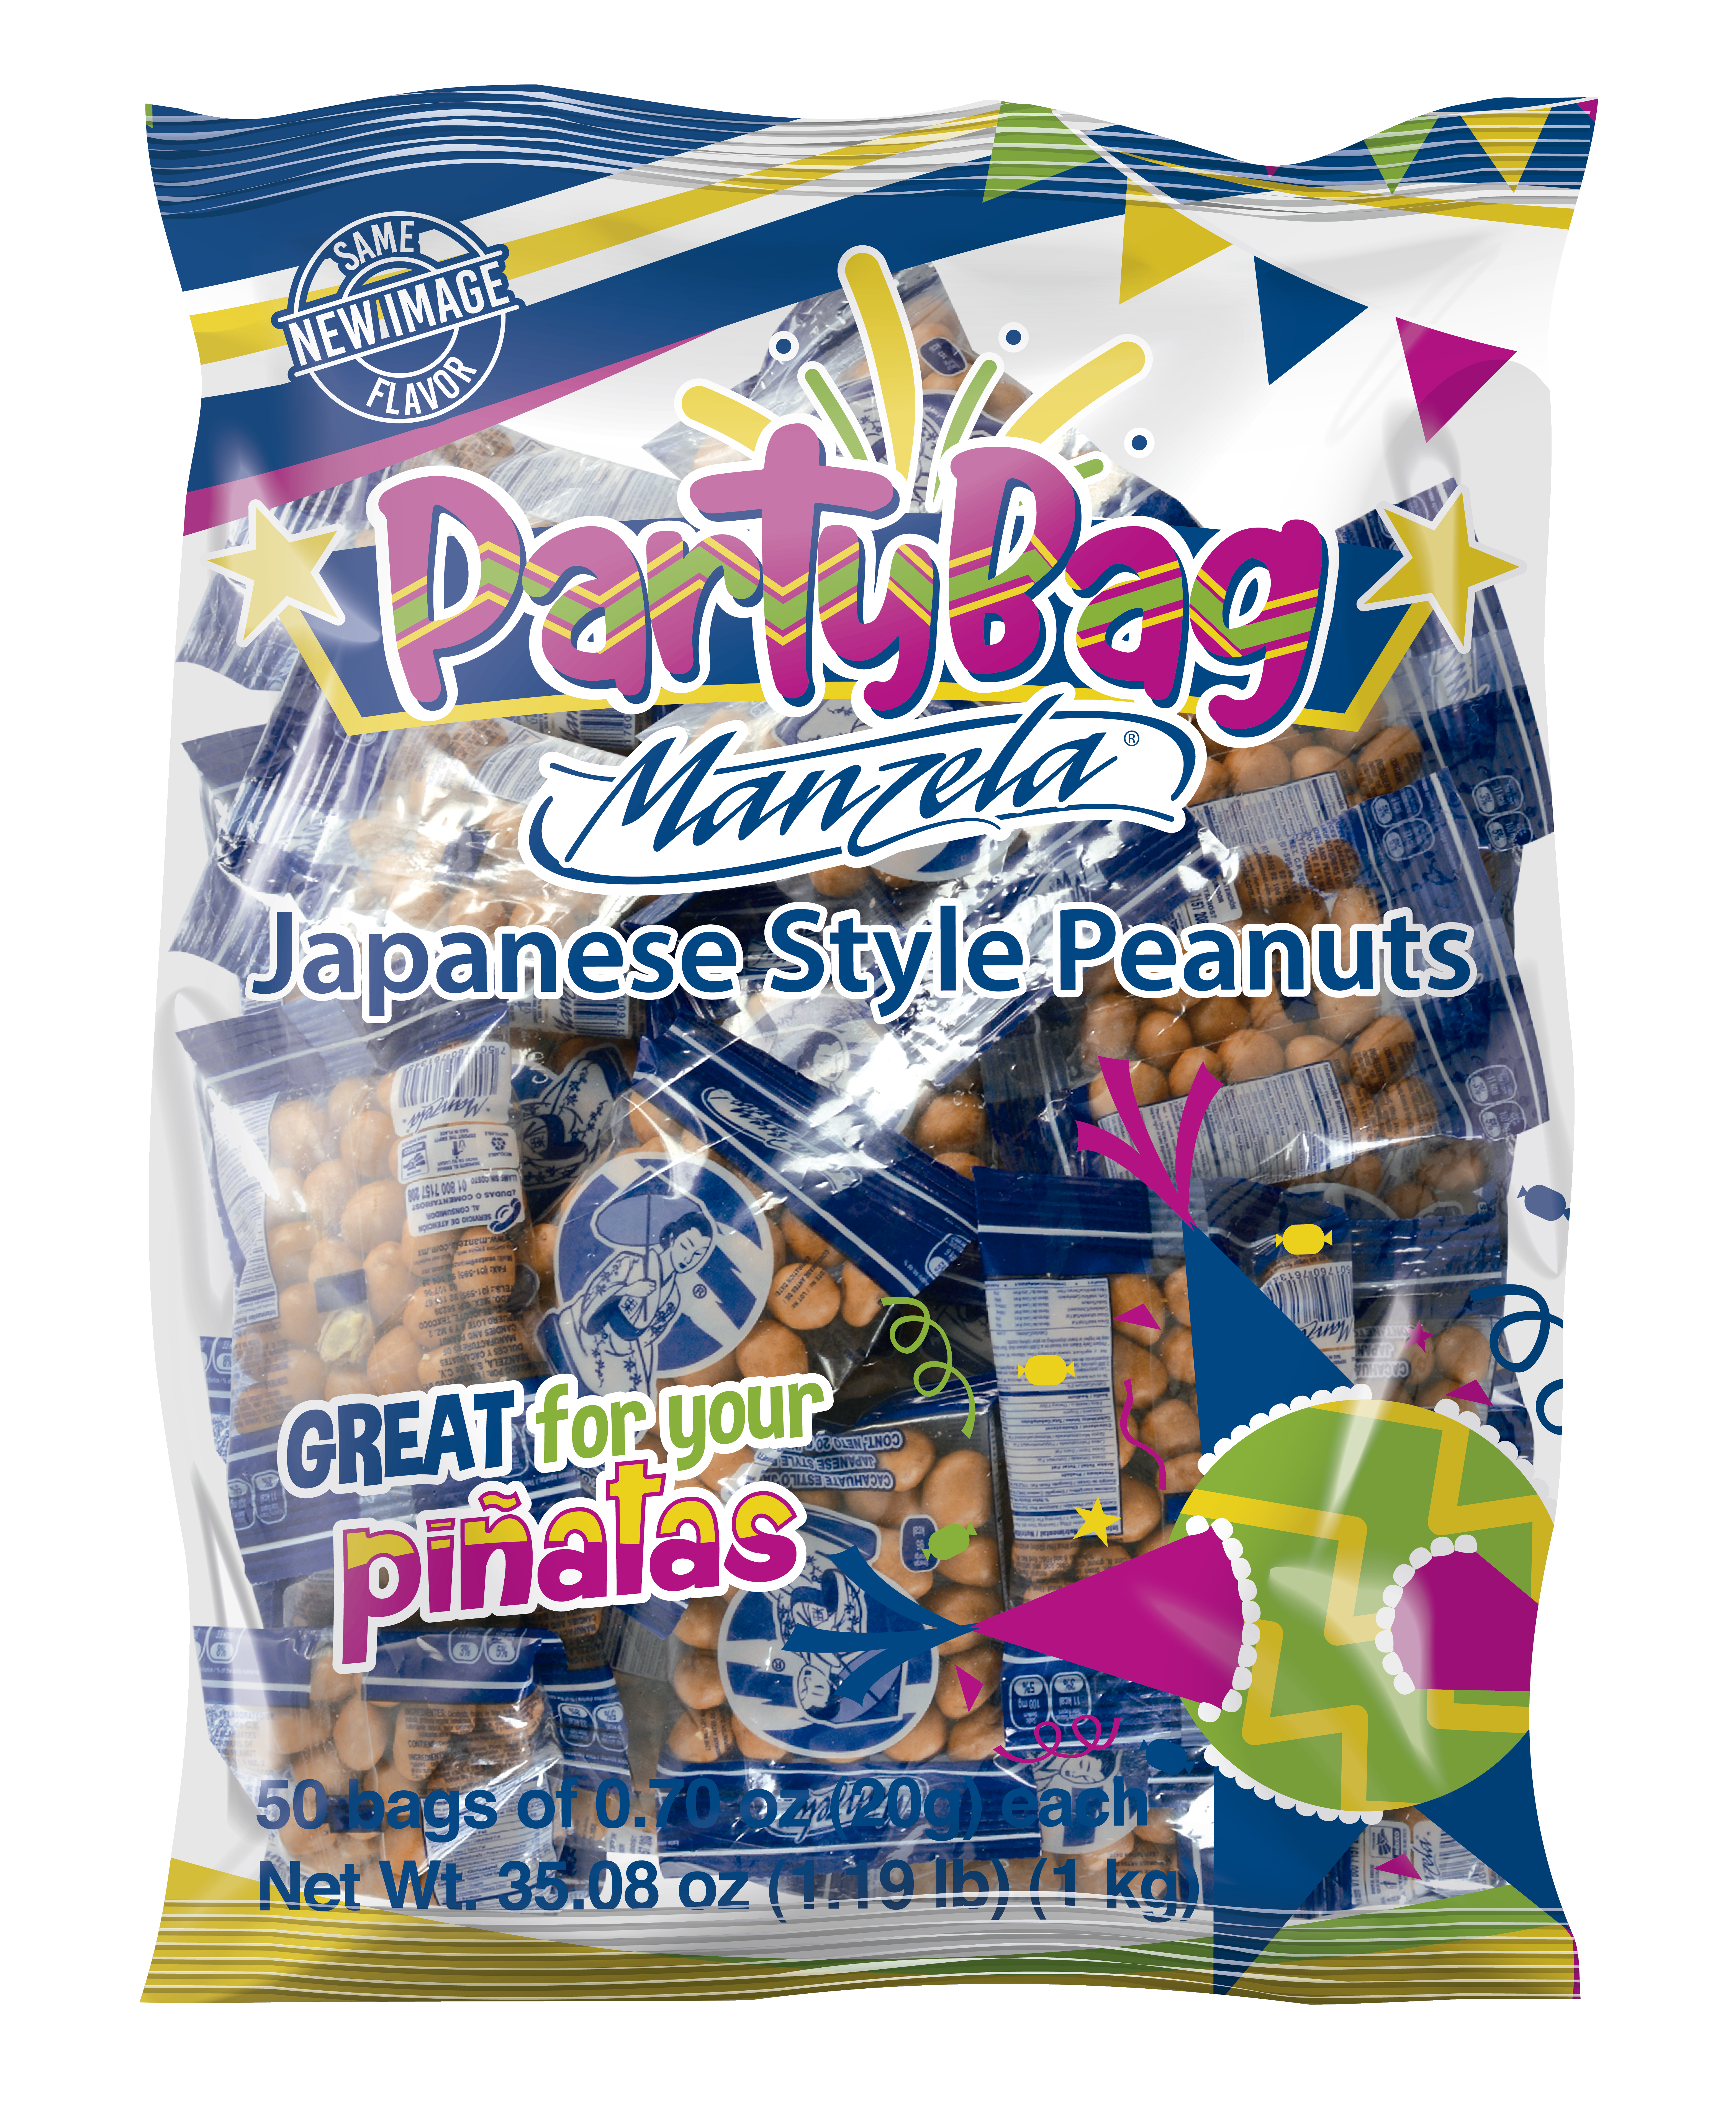 Manzela japanese style peanuts party bag 50ct 0.7o